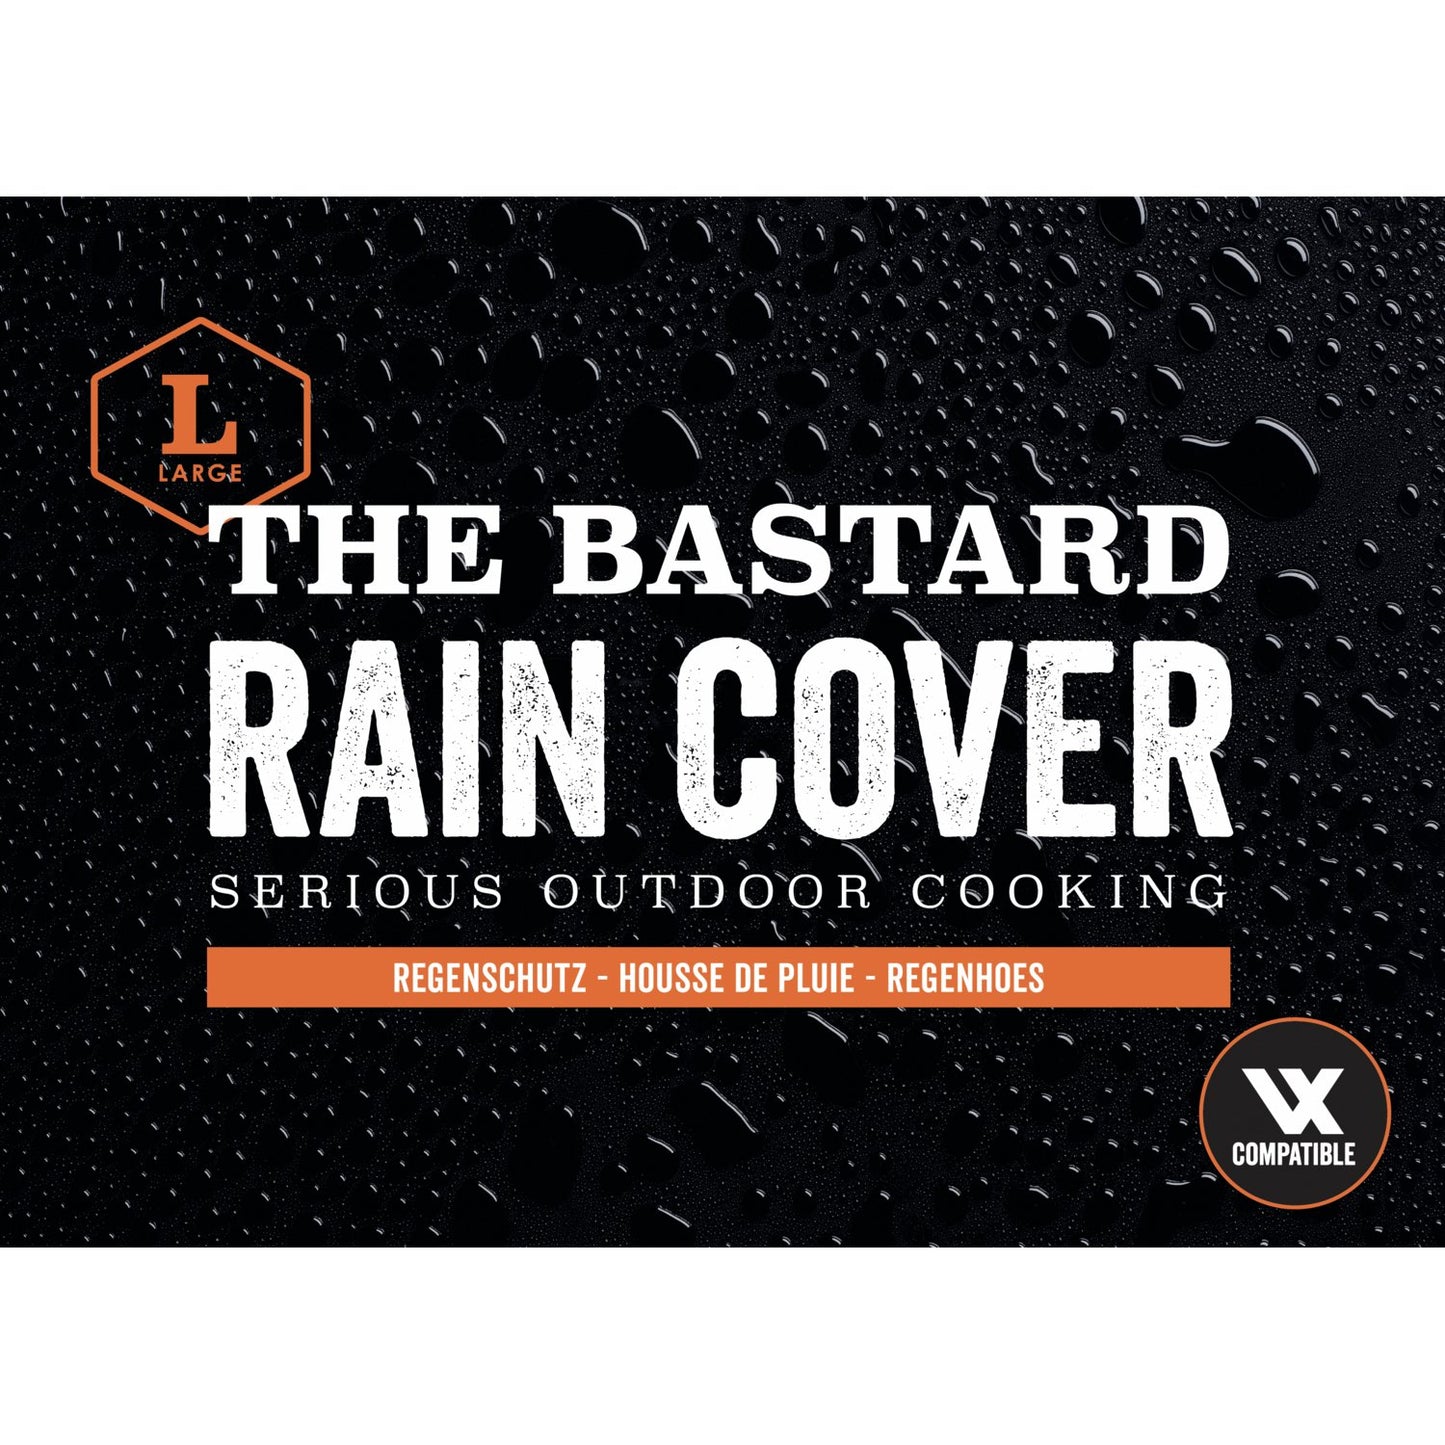 The Bastard Raincover Large (VX Compatible)